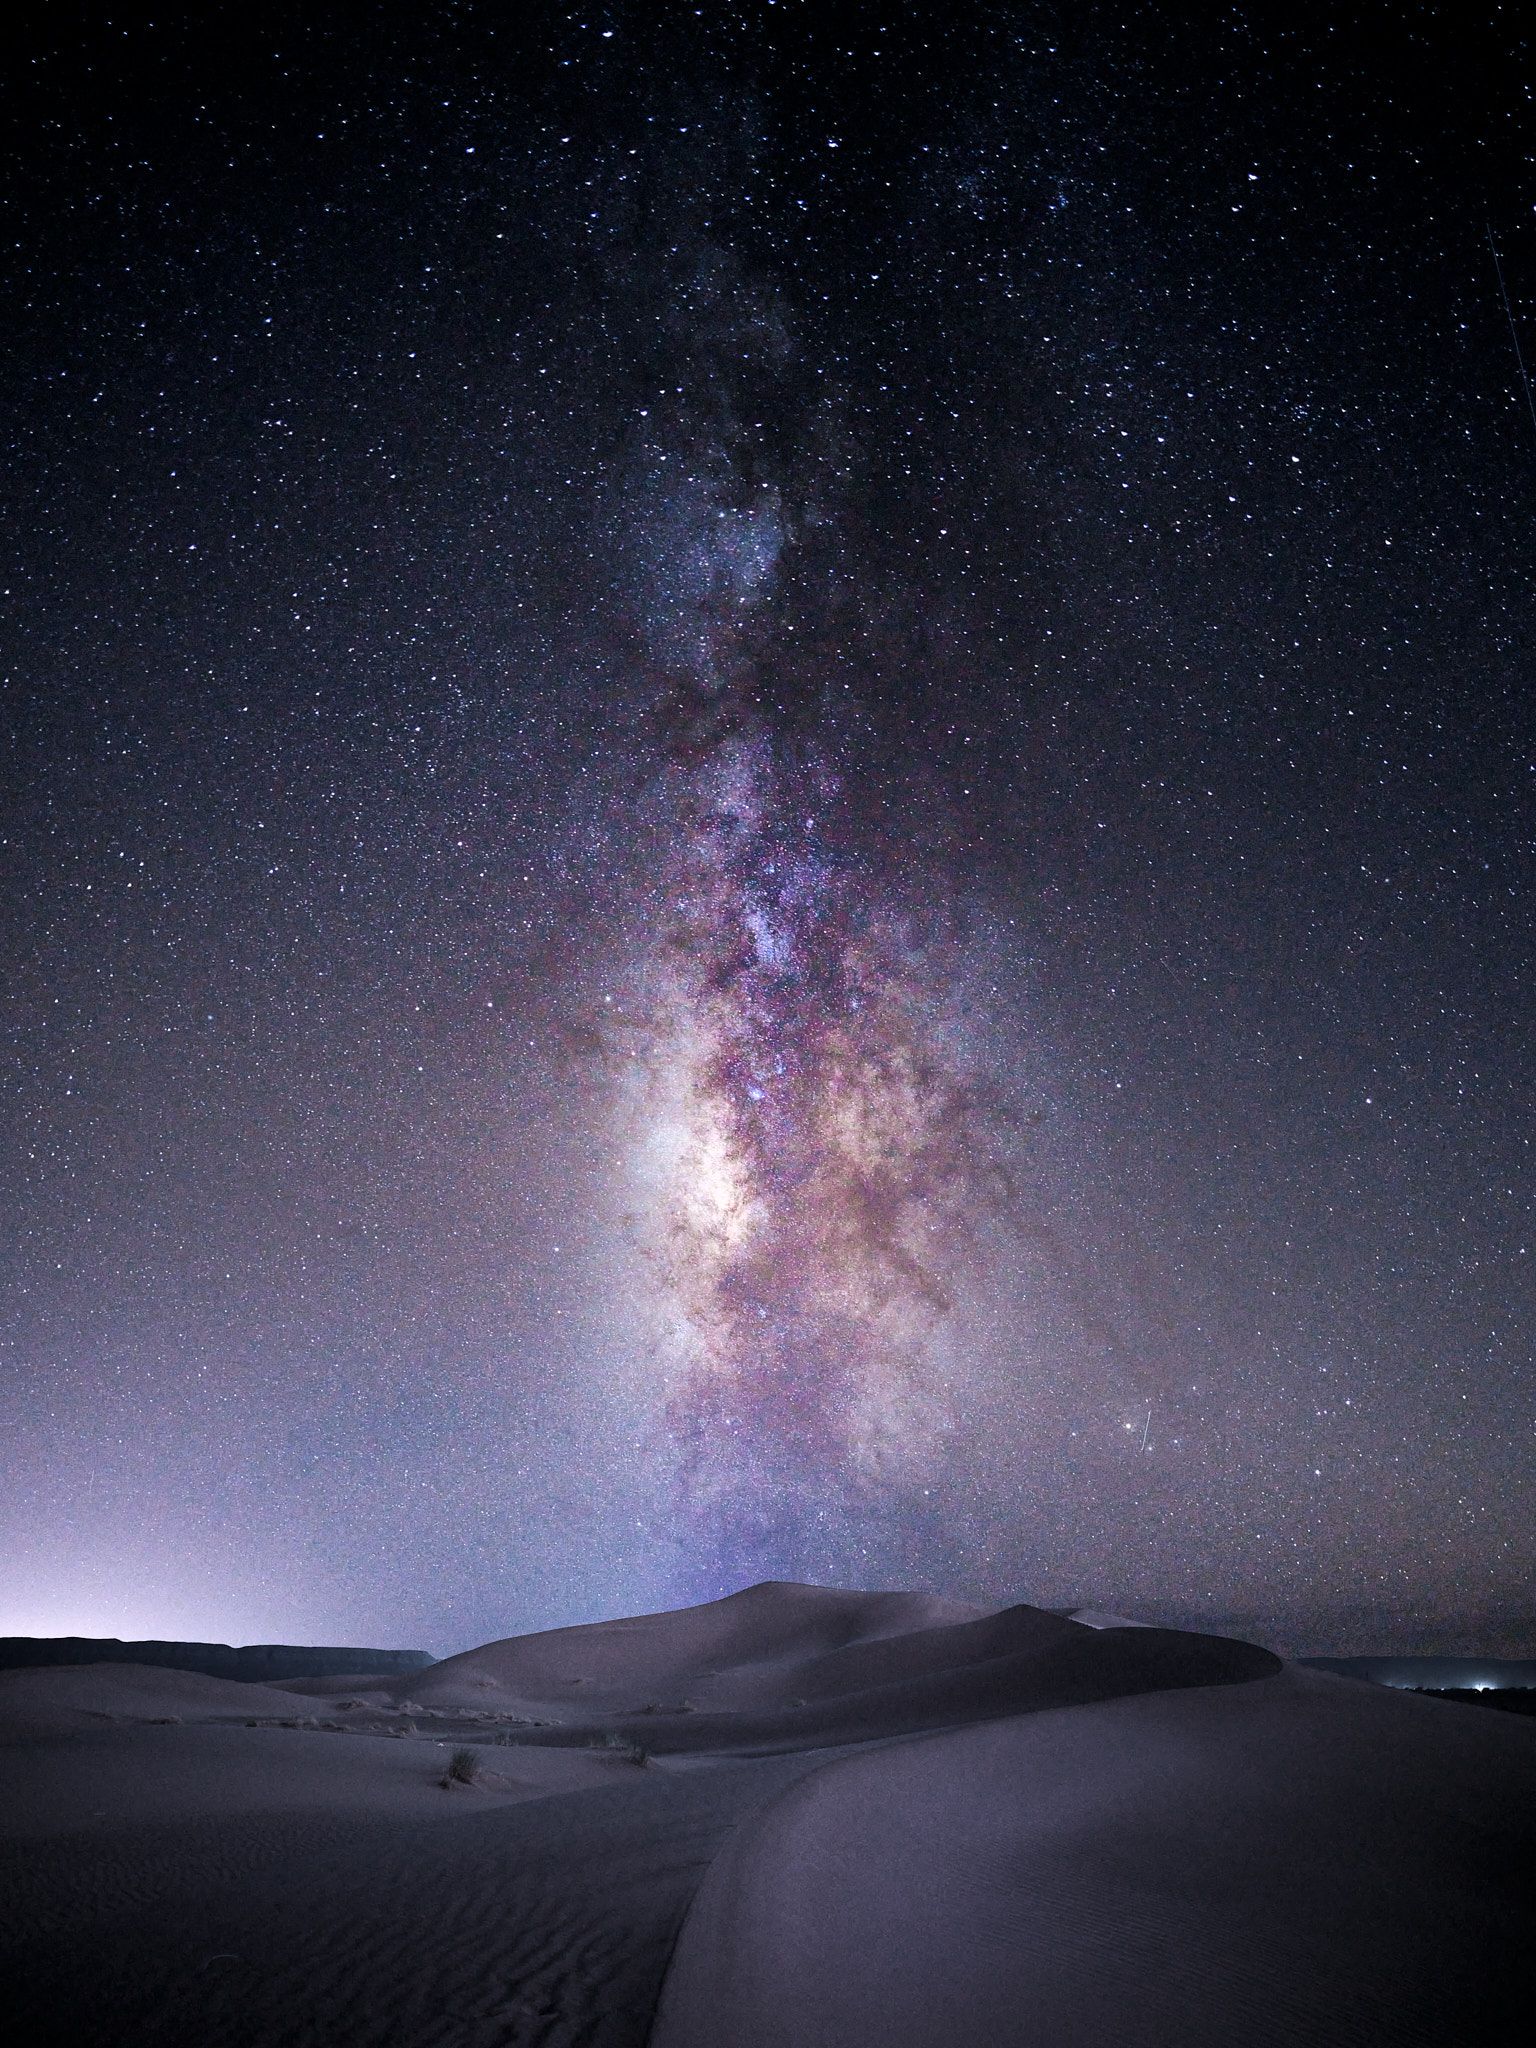 Marocco,desert,stars,sand dunes,long exposure,nightscape,landscape, Milky Way,phase one ,, Felix Ostapenko